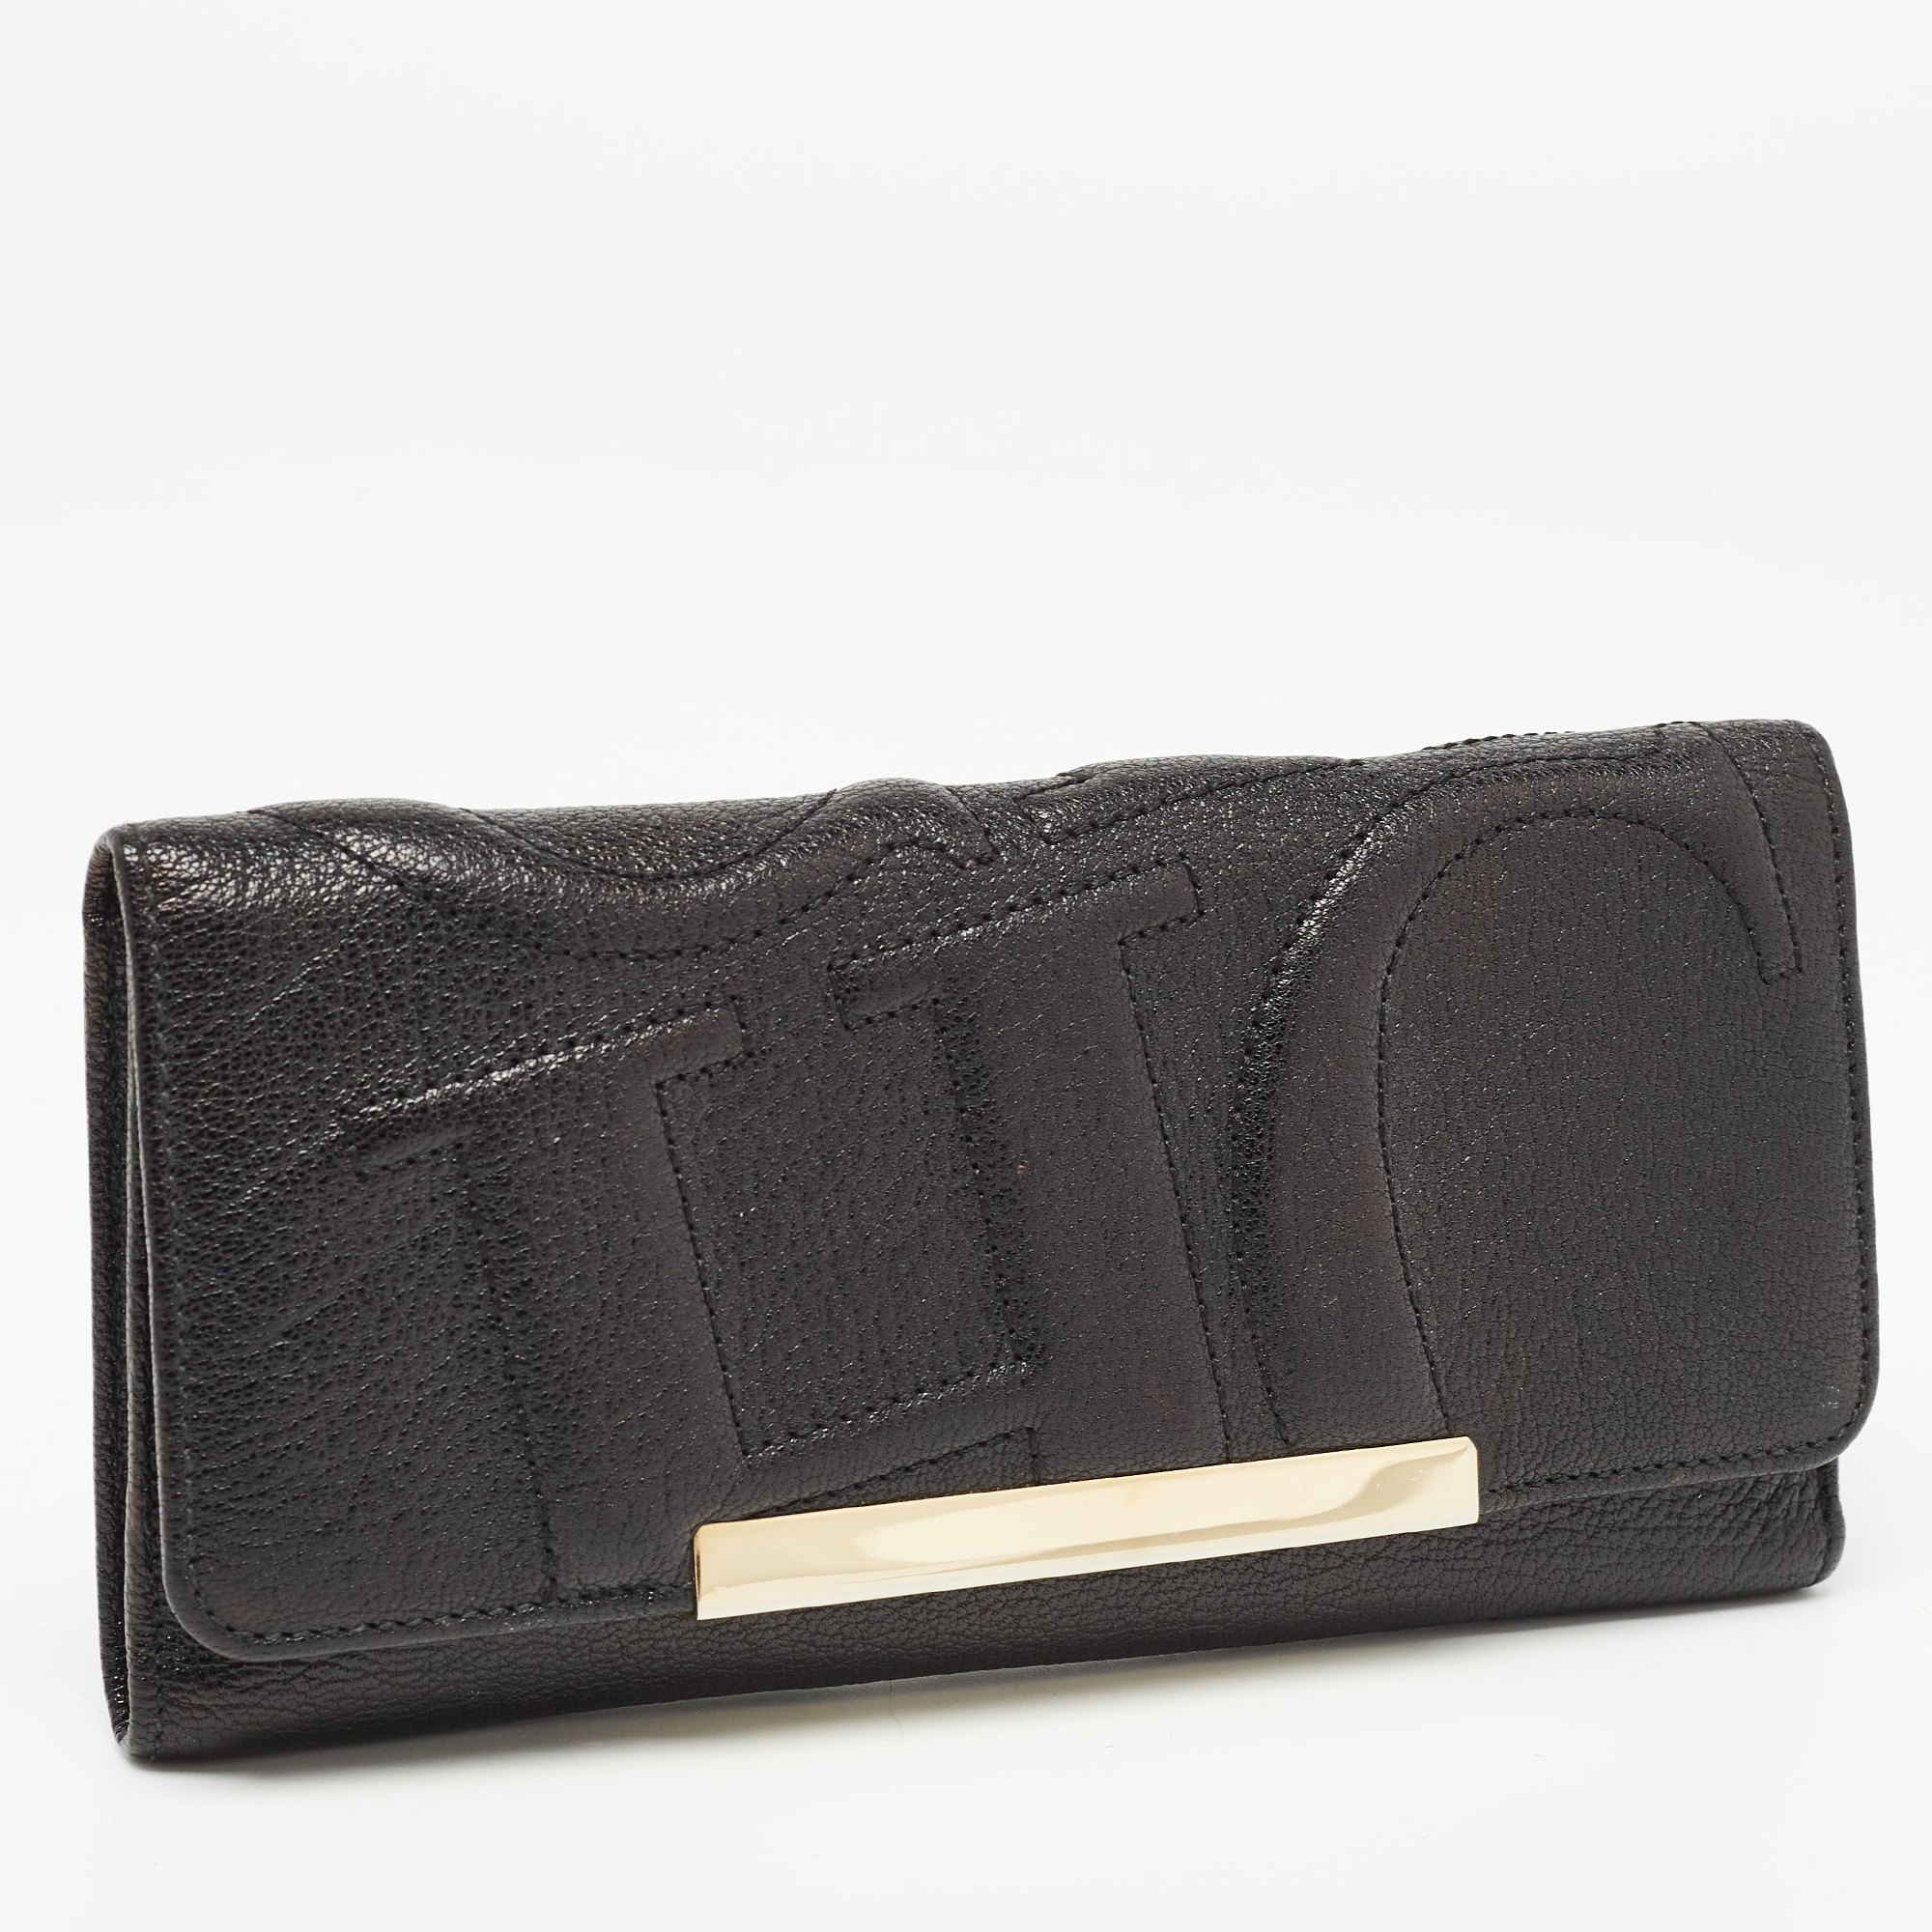 CH Carolina Herrera Black Leather Flap Trifold Continental Wallet